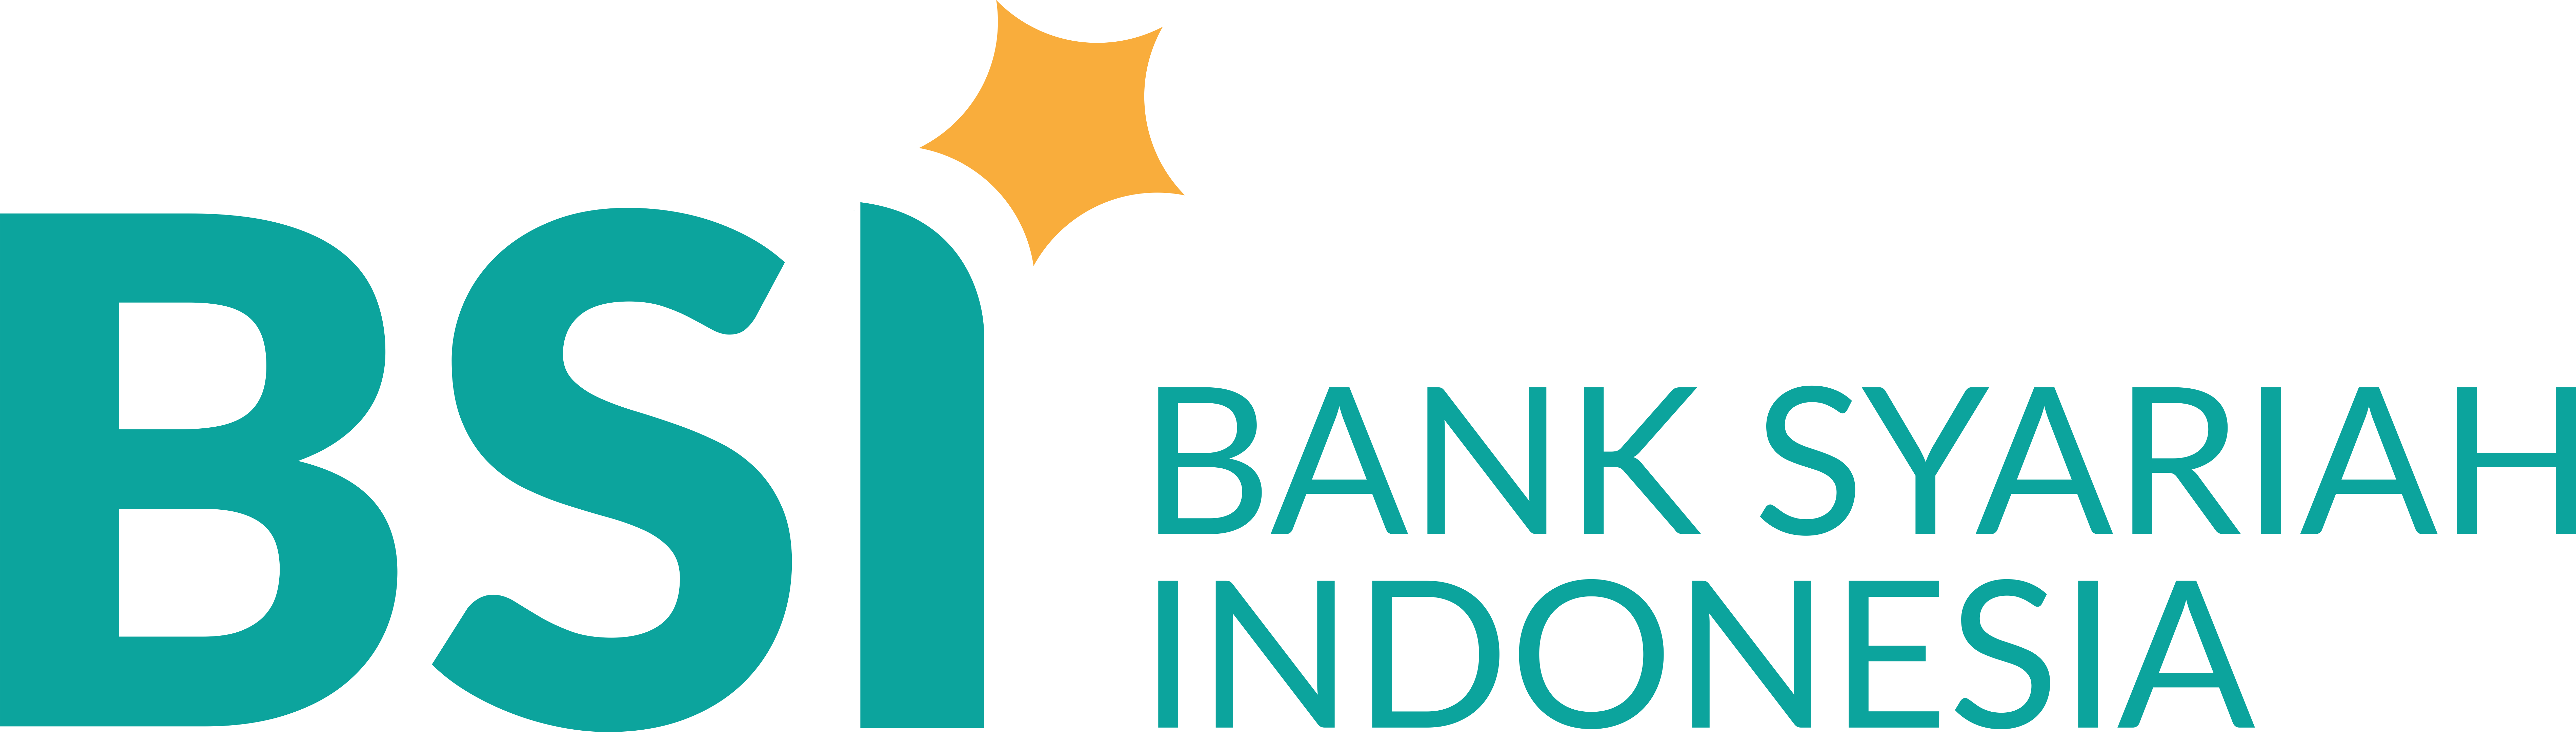 BSI-Bank-Syariah-Indonesia-Logo-PNG2160p-Vector69Com.png